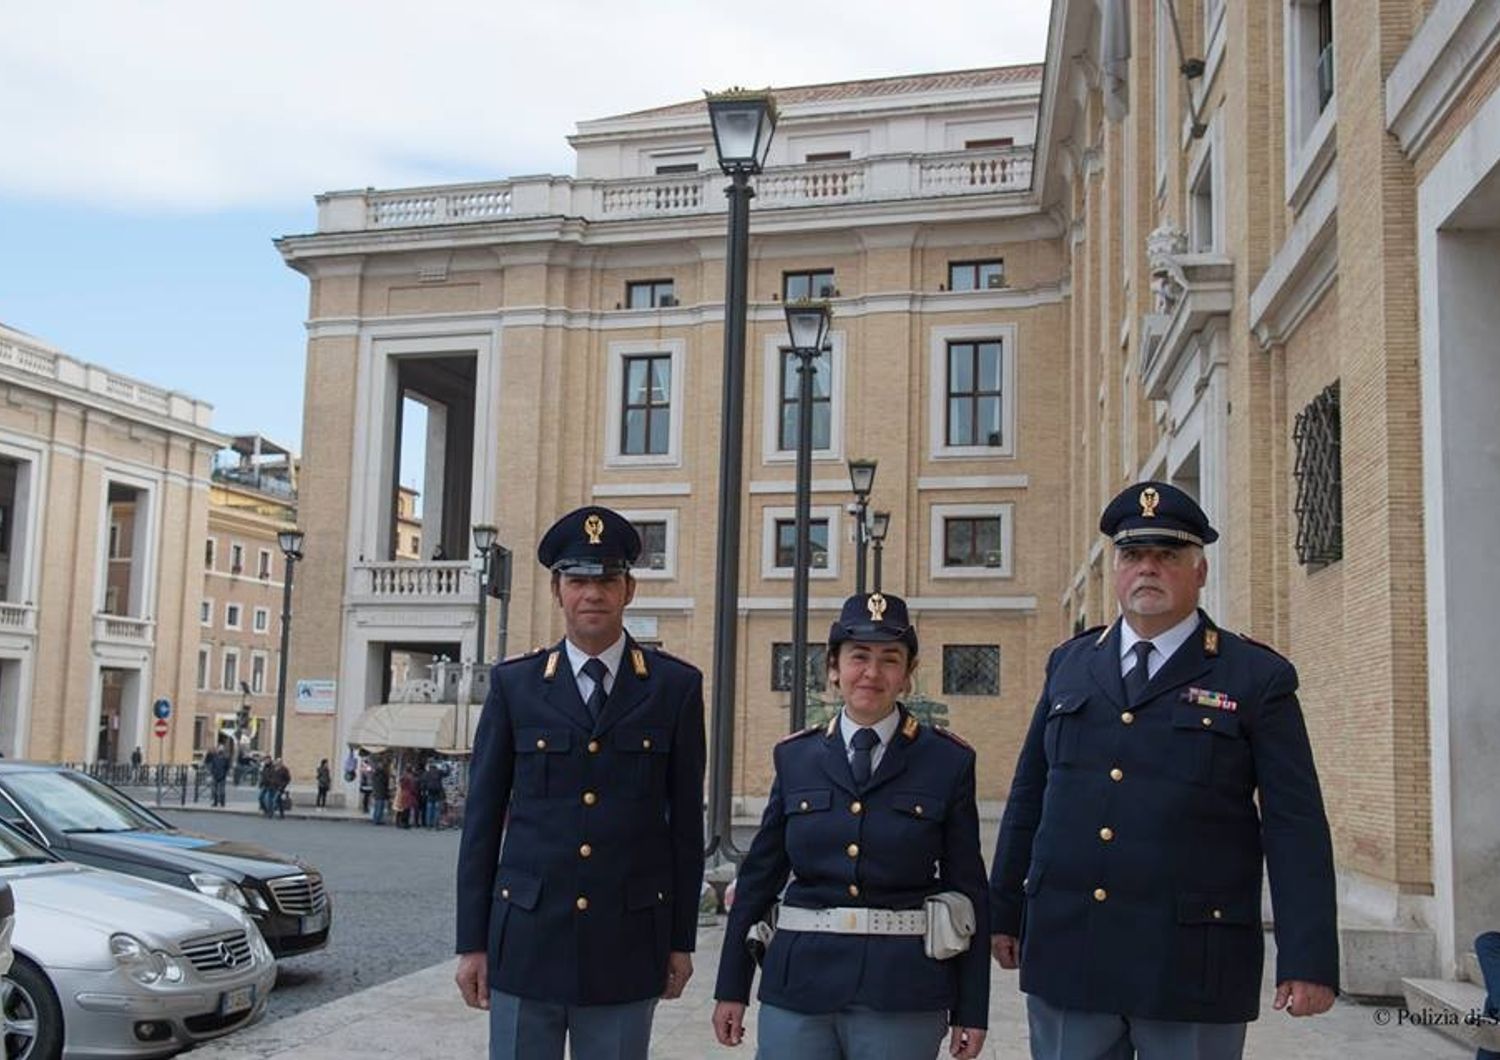 &nbsp;Roma polizia vaticano poliziotta ostetrica - fb agente lisa